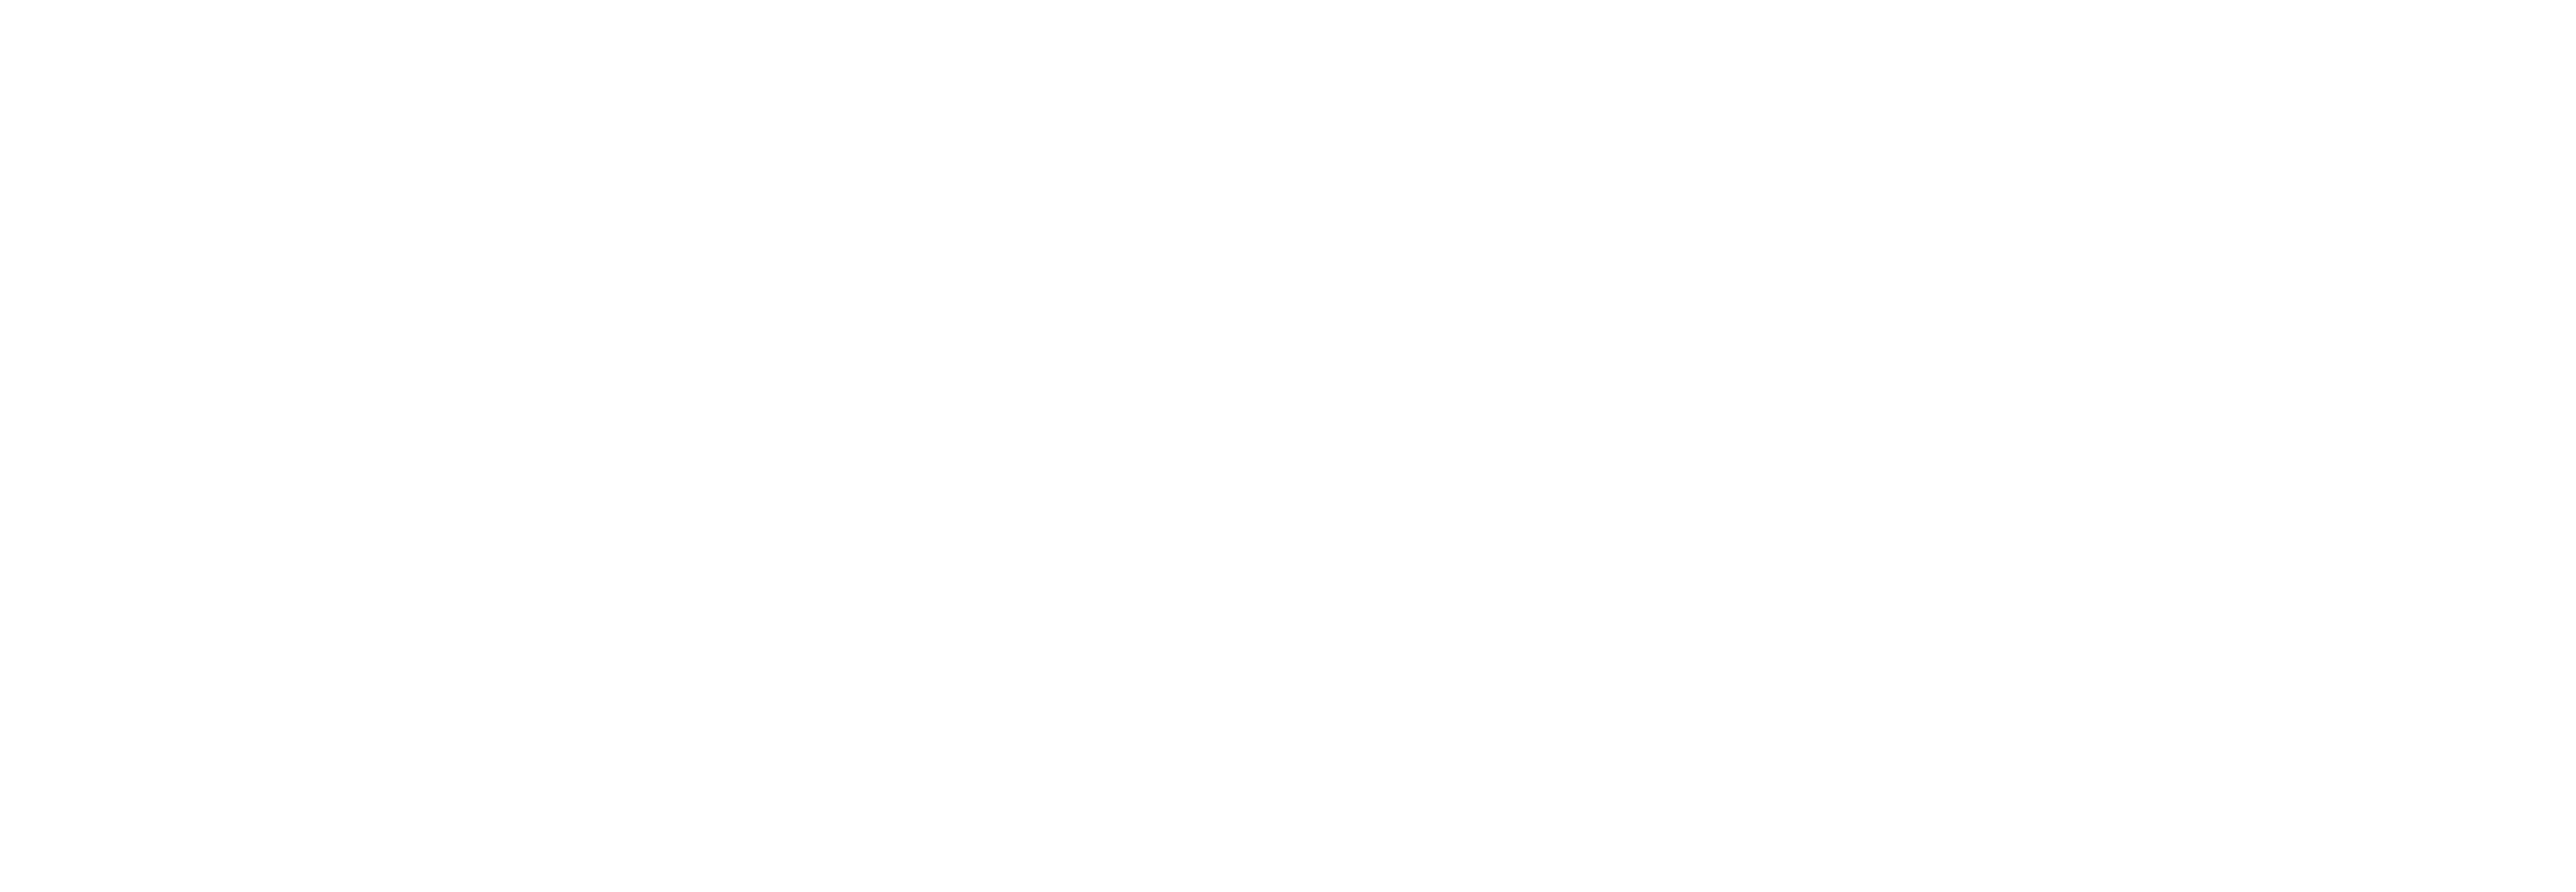 The Fetchington Pet Hotel